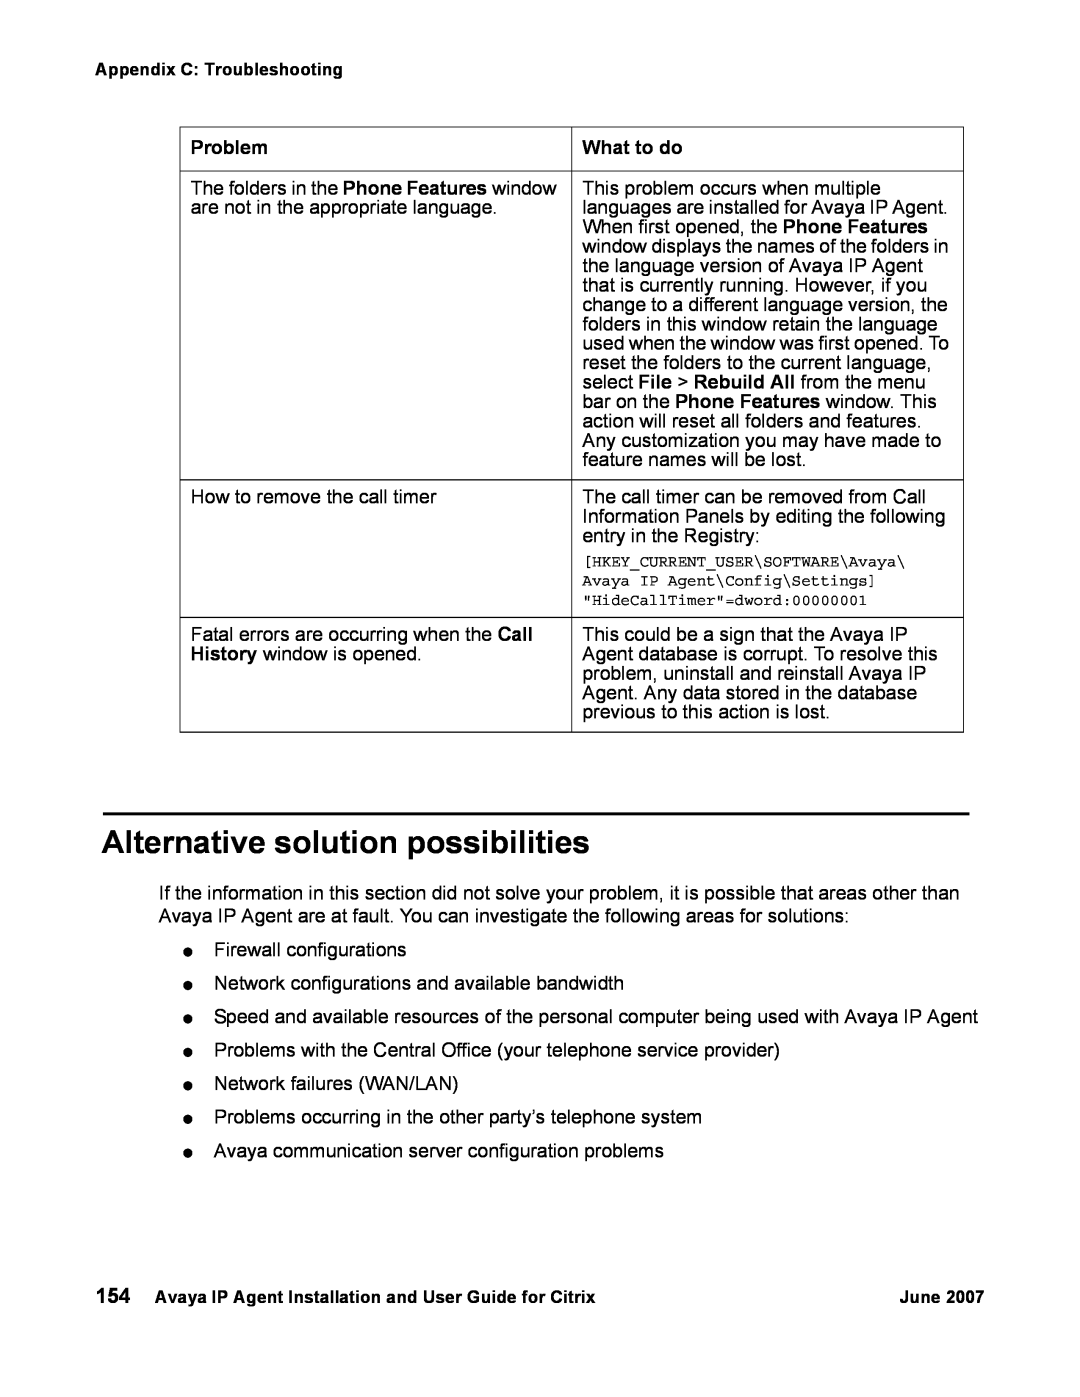 Avaya 7 manual Alternative solution possibilities 